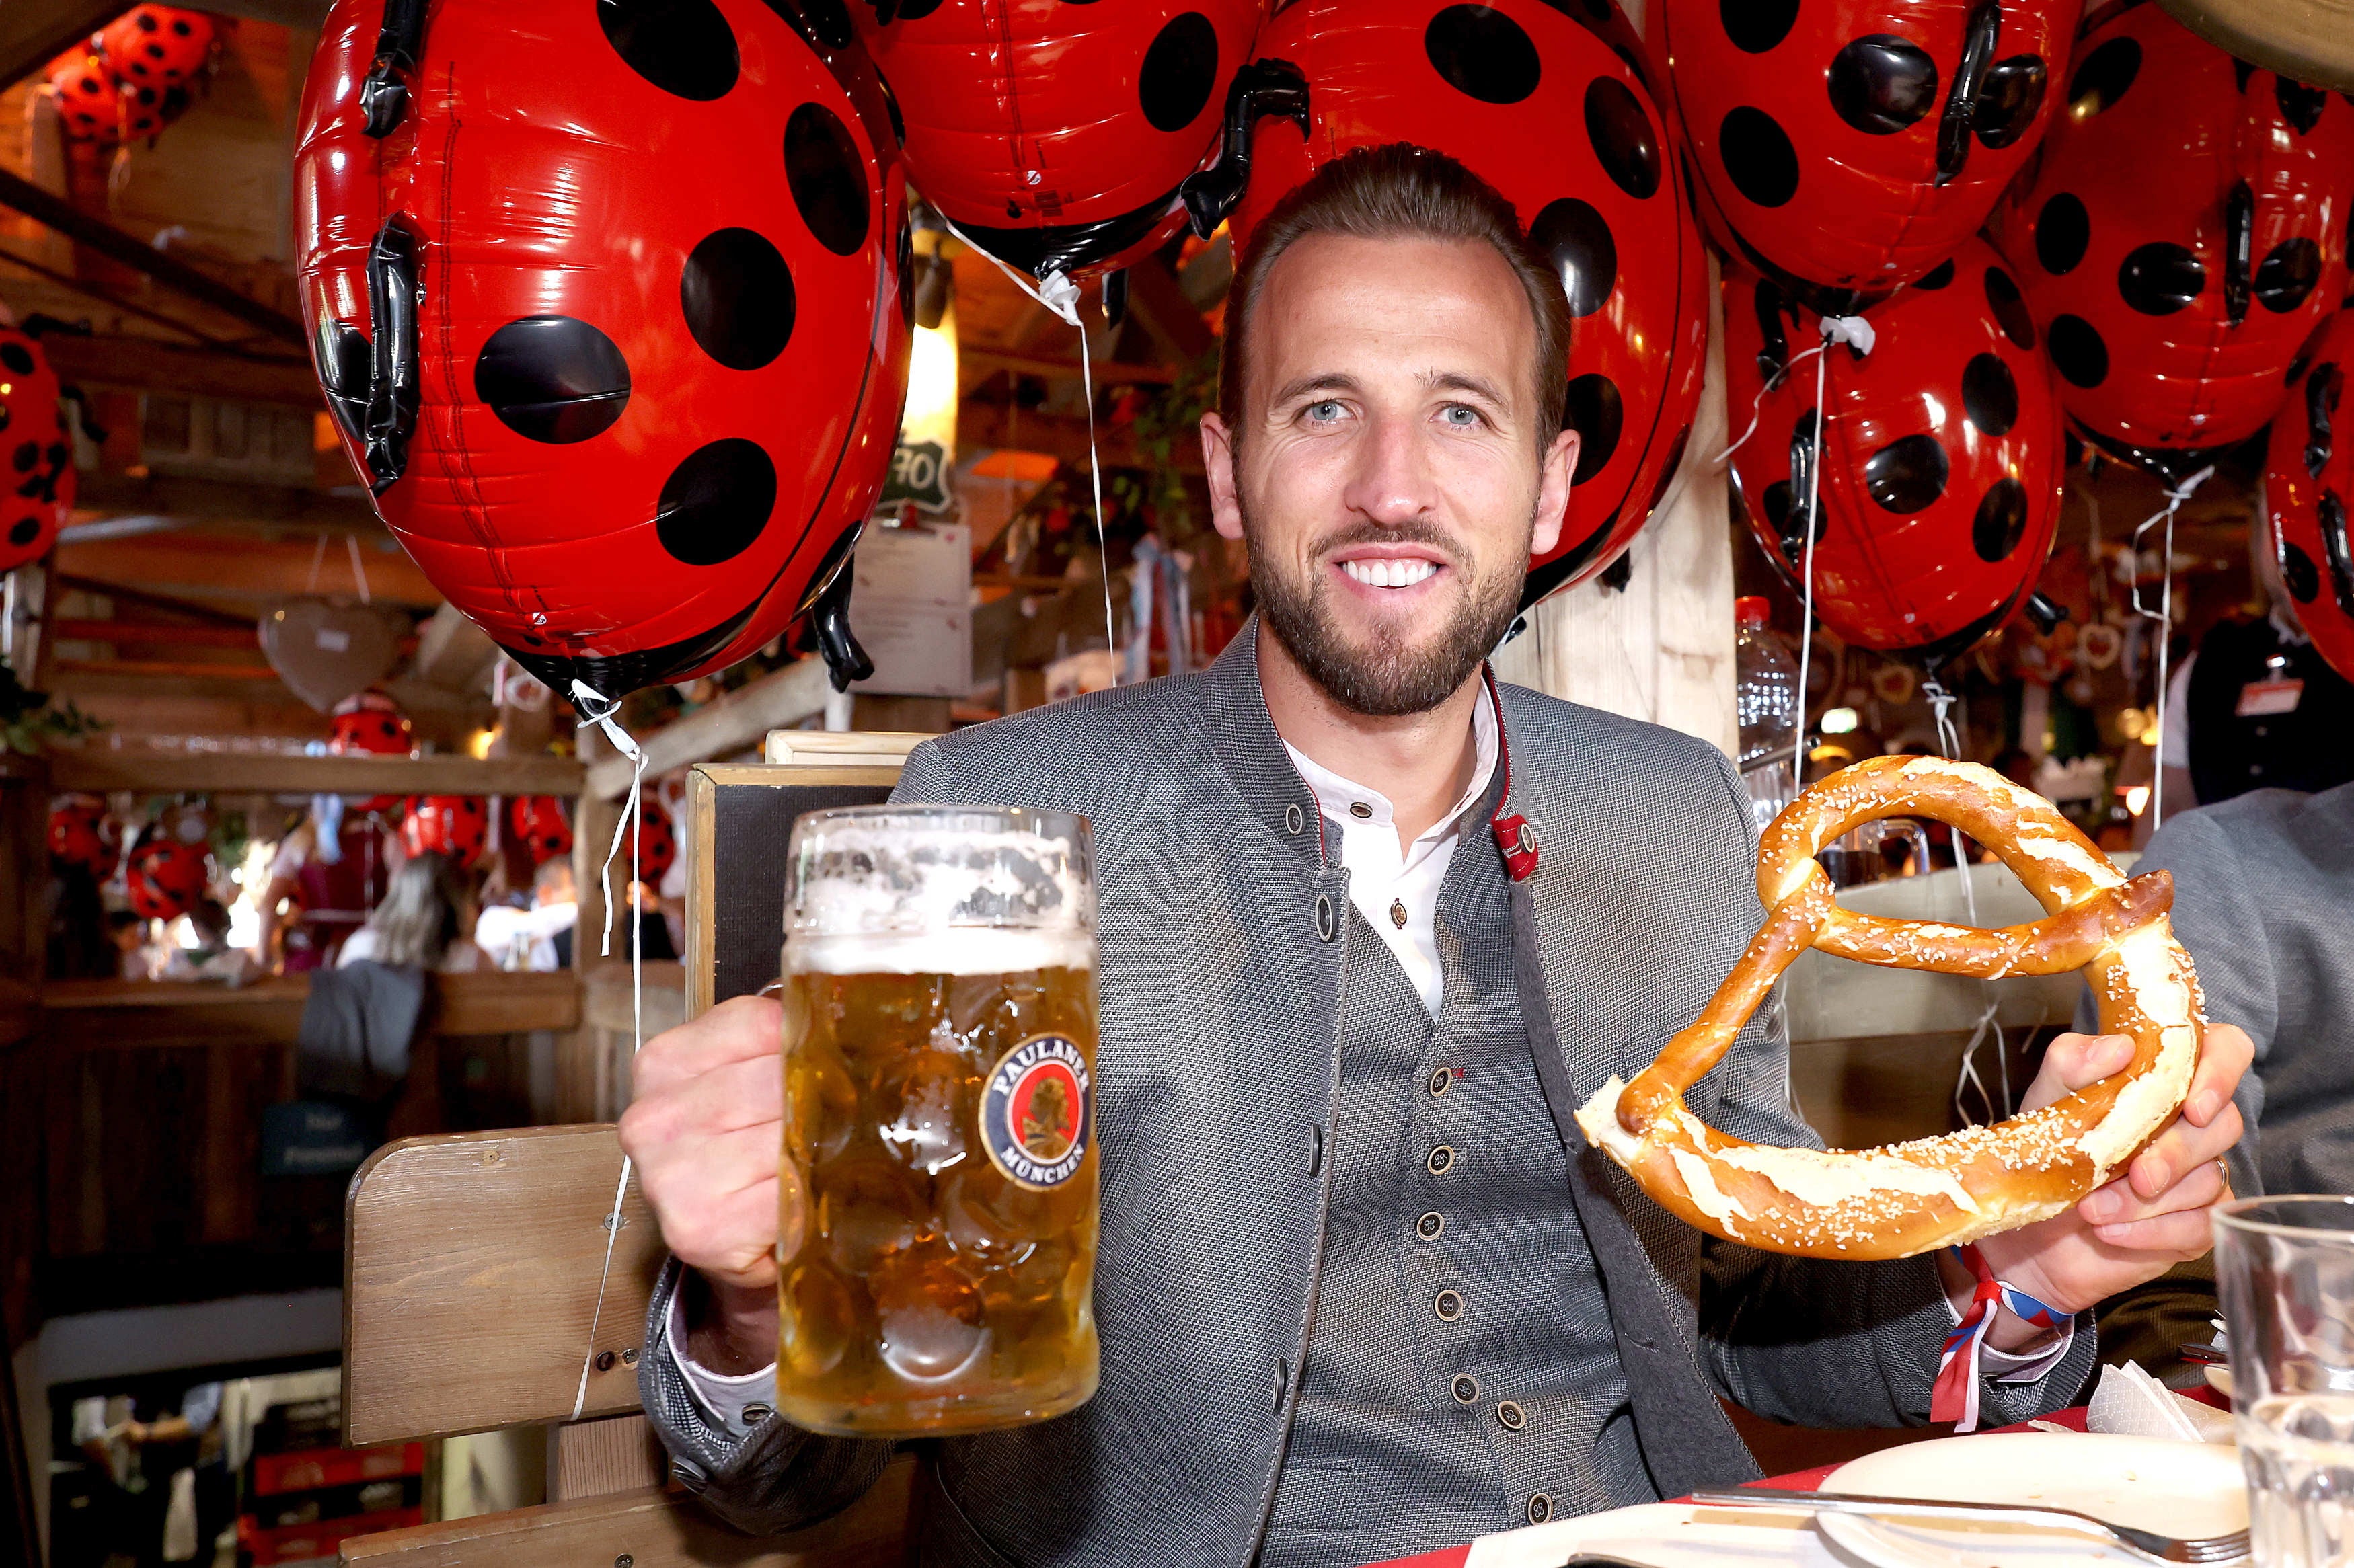 Kane enjoys the traditions of Oktoberfest in Munich